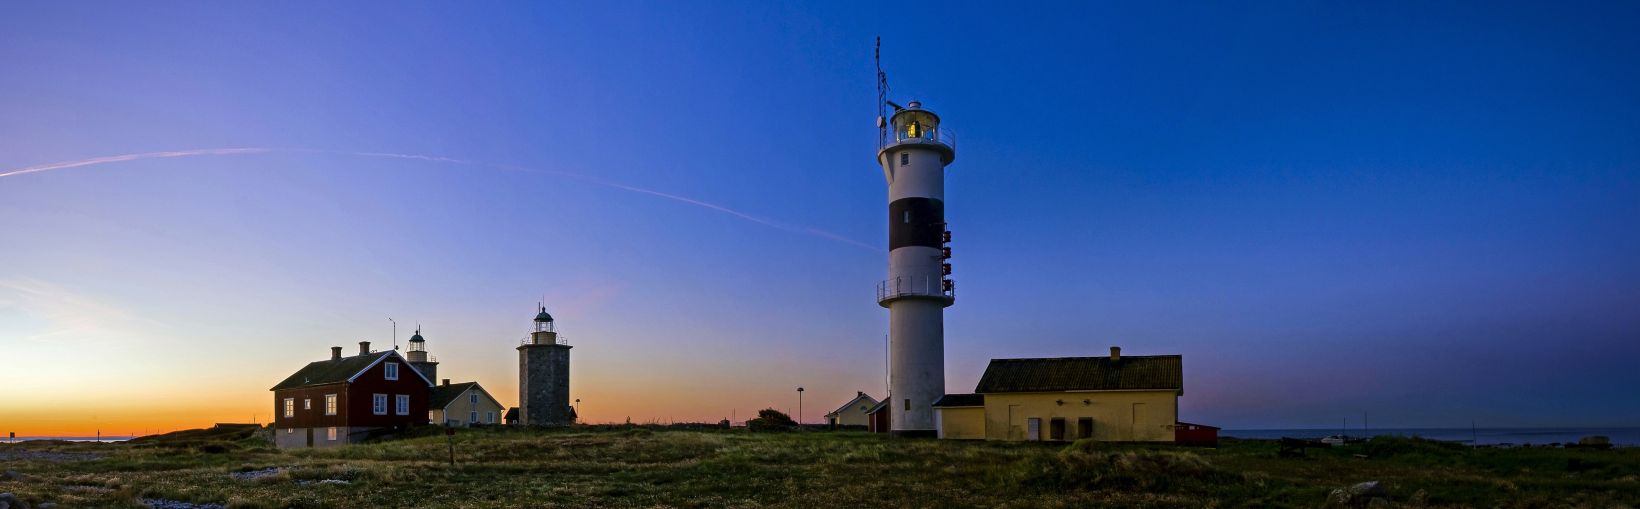 Lighthouse on the coast of Sweden at sundown